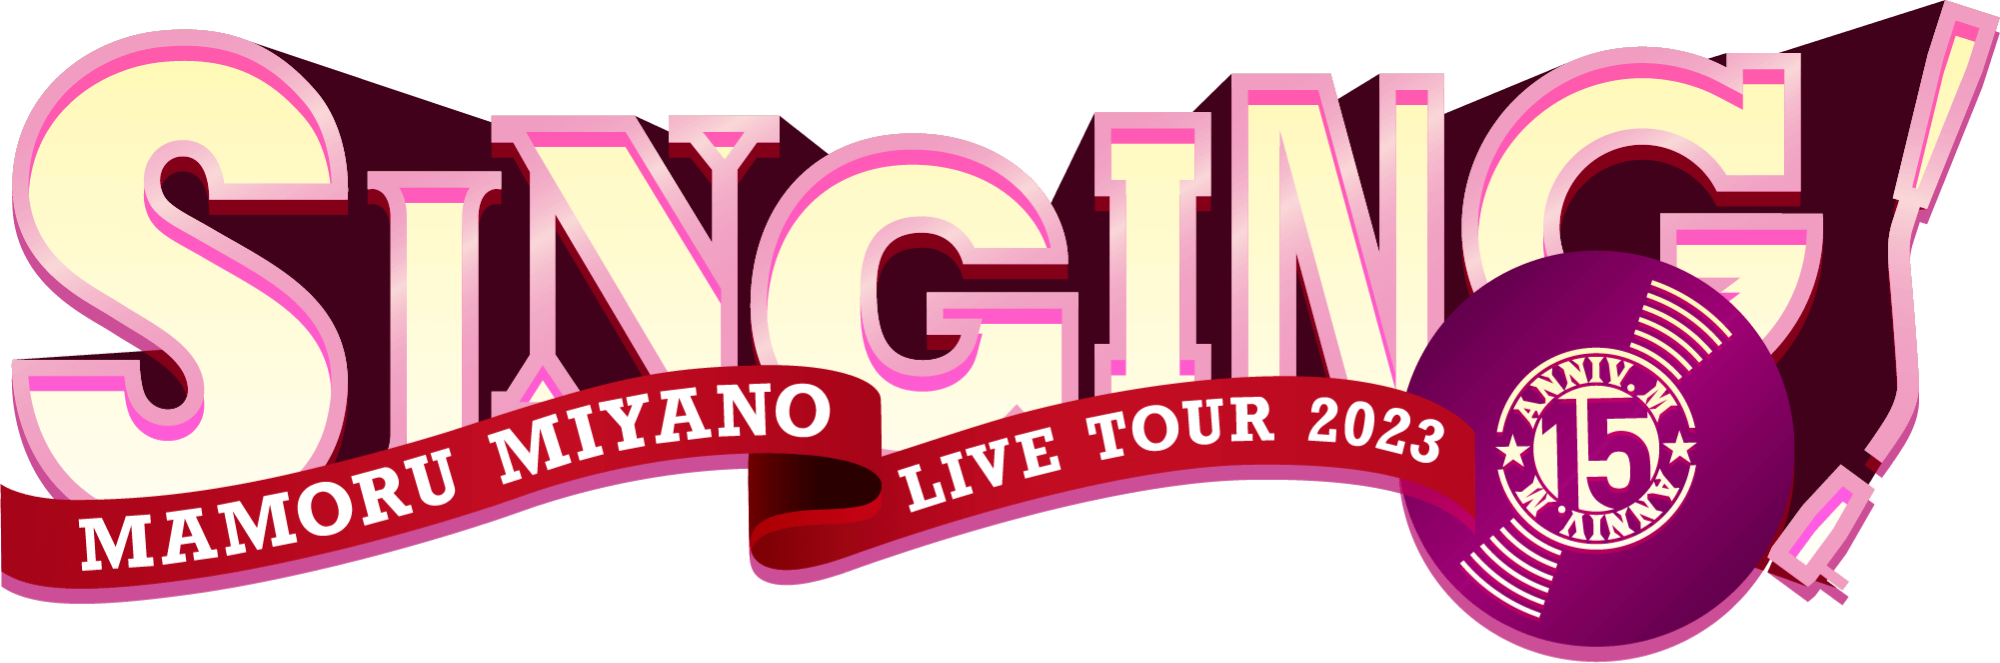 MAMORU MIYANO LIVE TOUR 2023 SINGING!